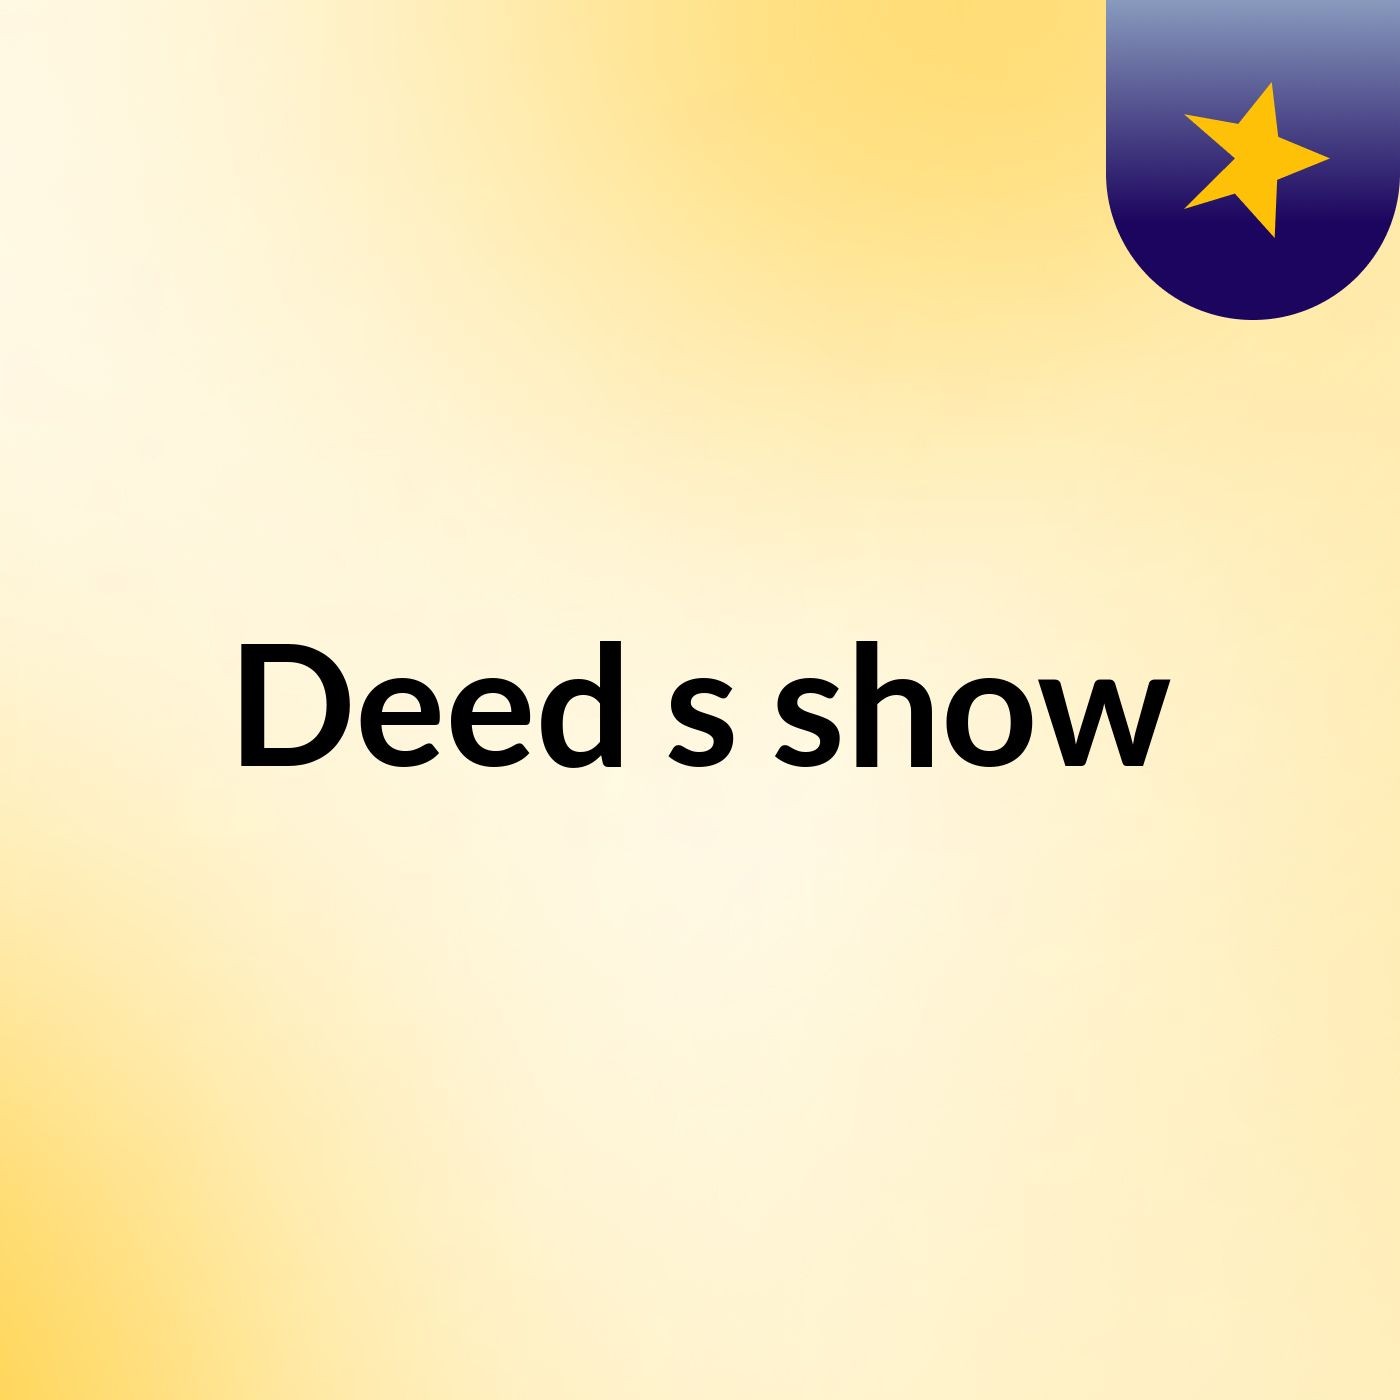 Deed's show